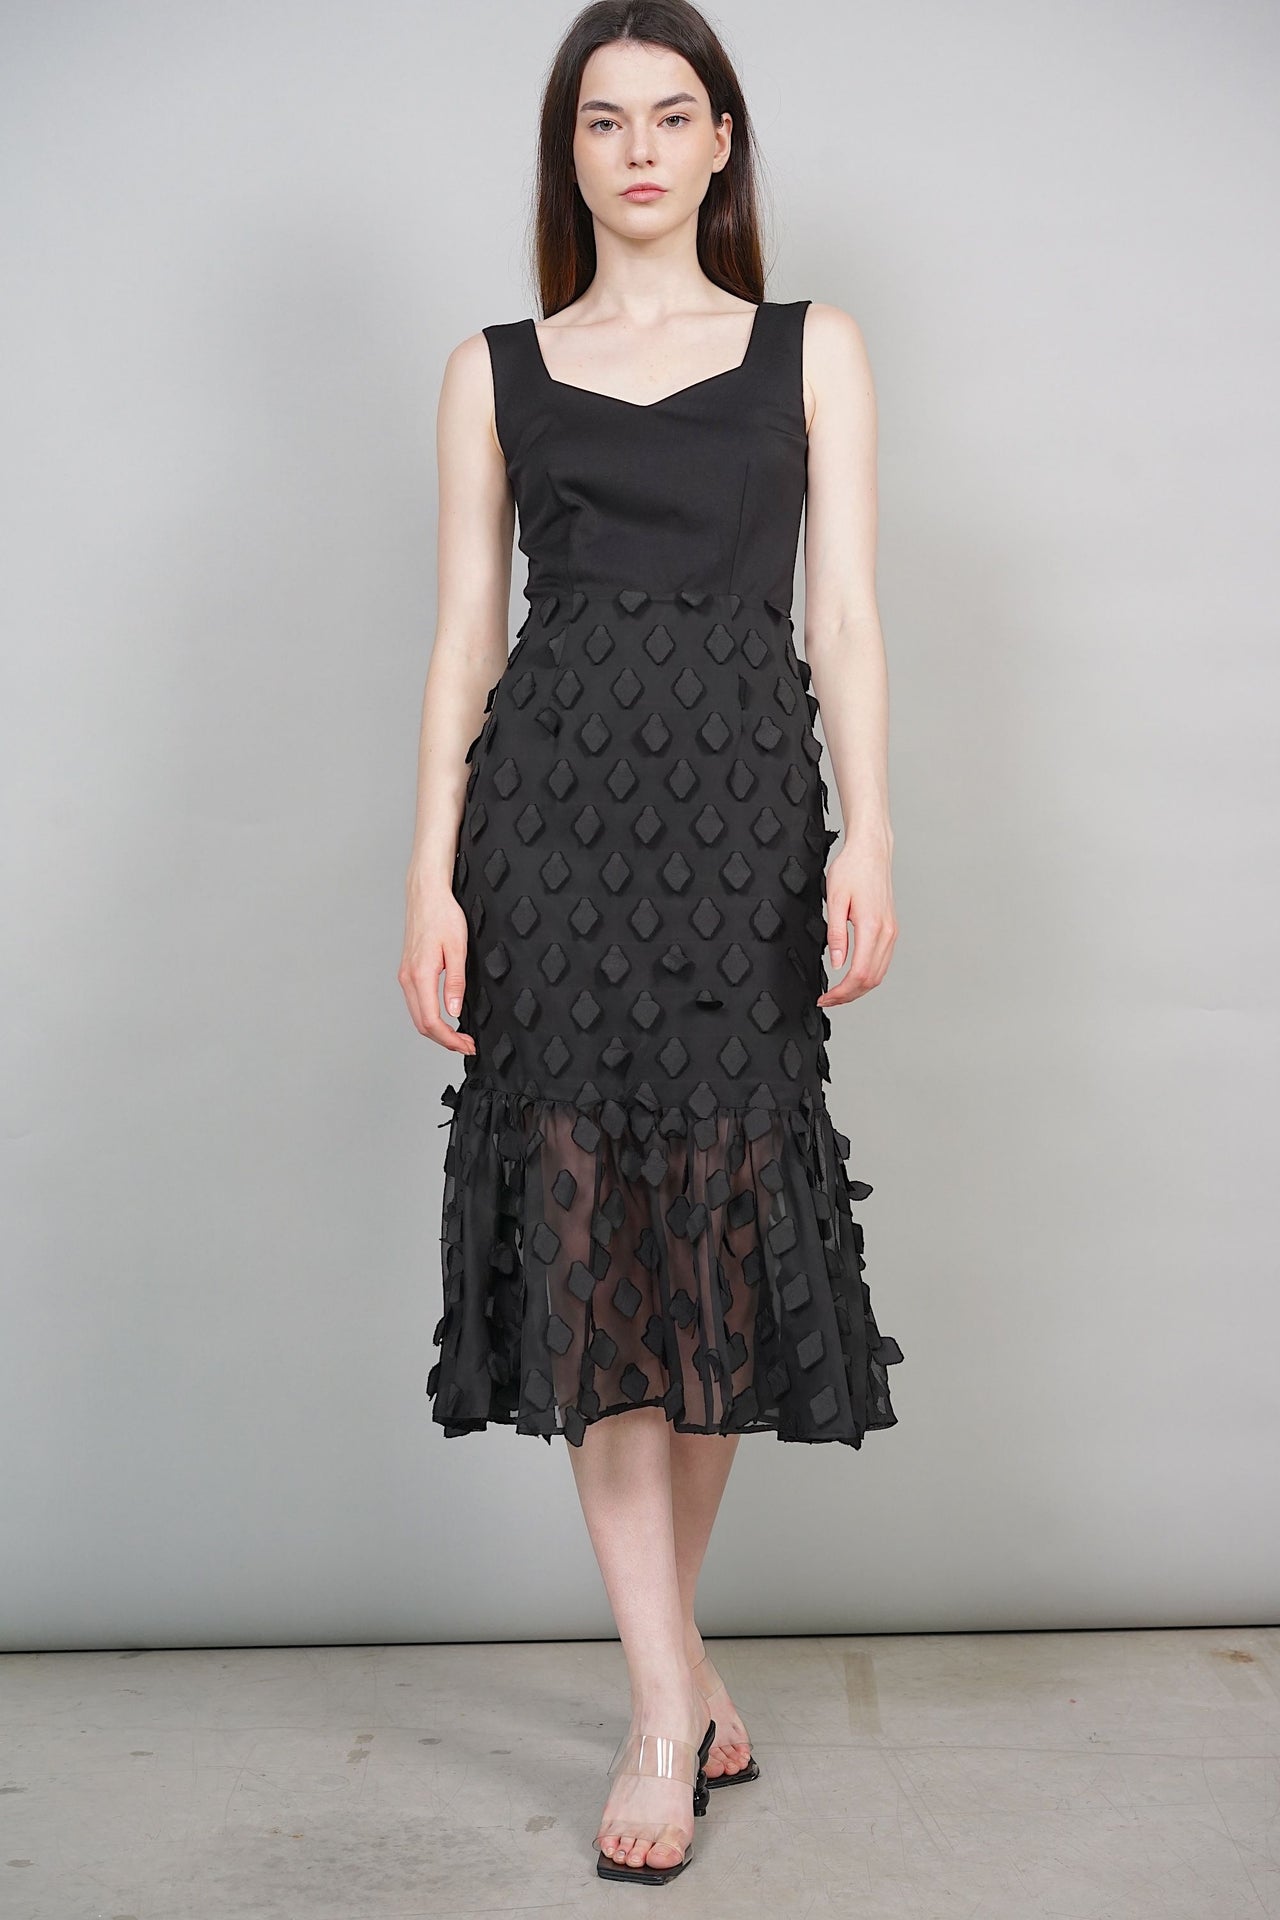 Erie Ruffled Hem Midi Dress in Black - Arriving Soon